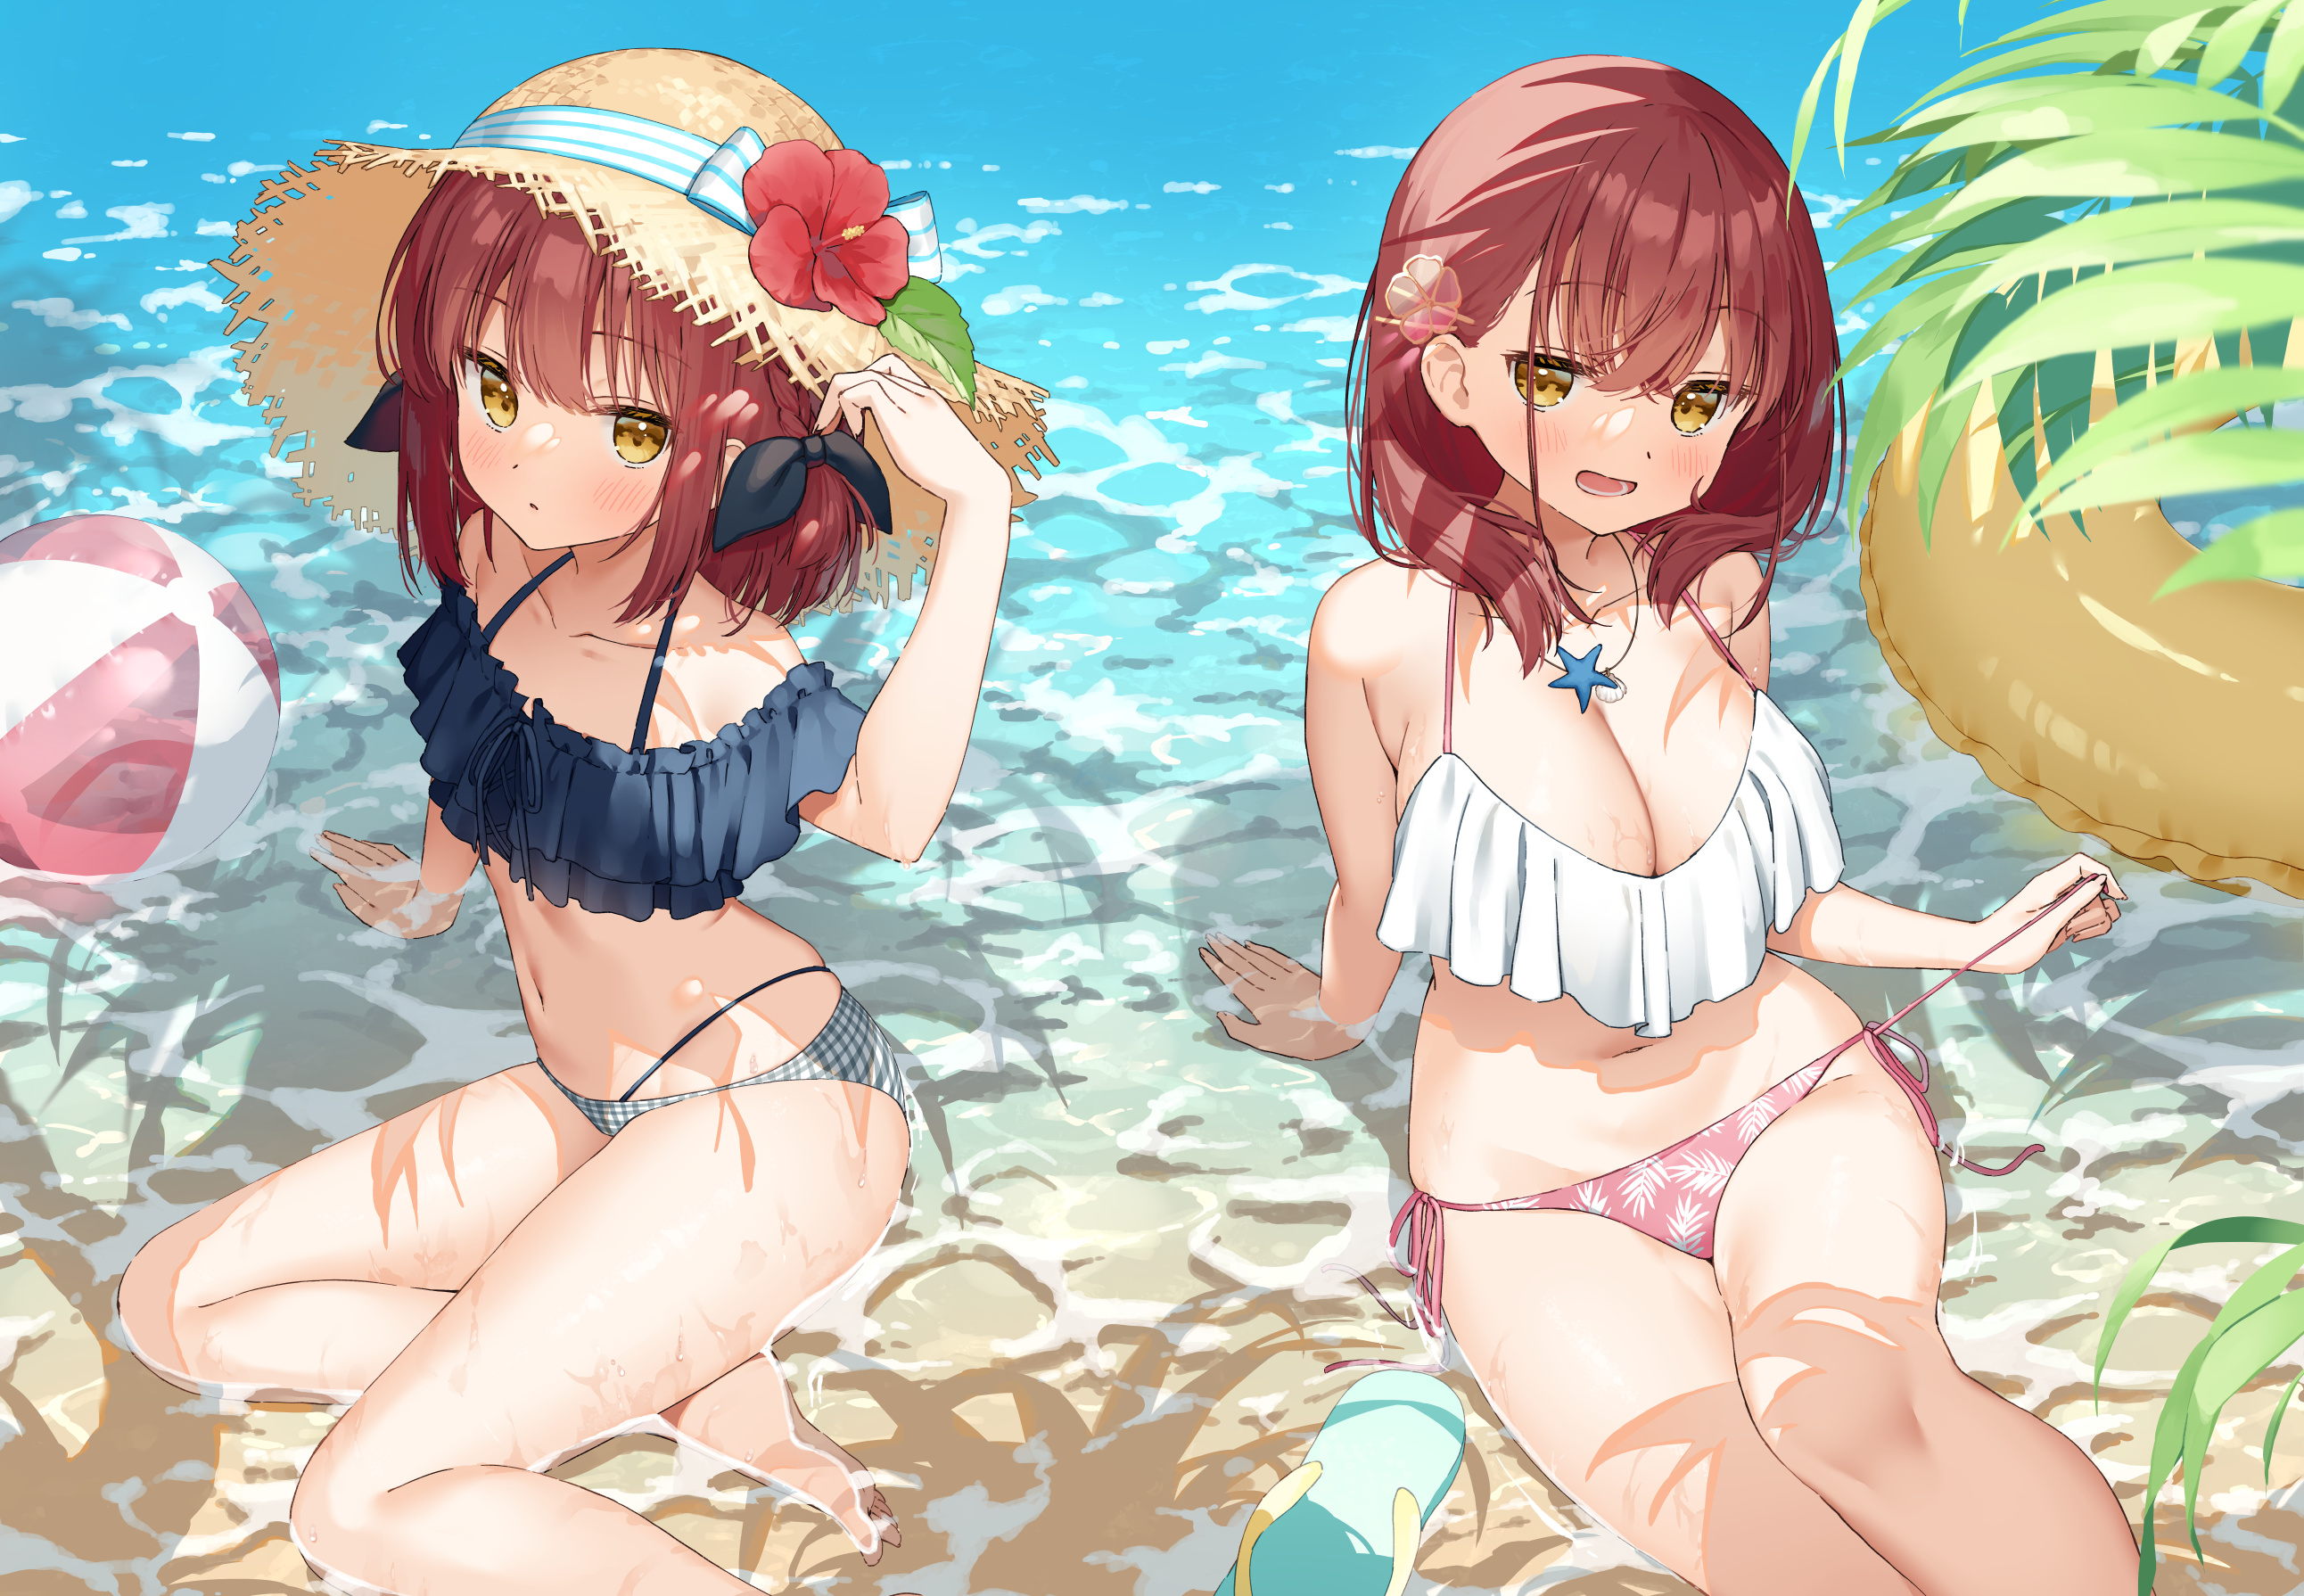 Anime Anime Girls Original Characters Twins Two Women Artwork Digital Art Fan Art Straw Hat Beach Ba 2584x1790